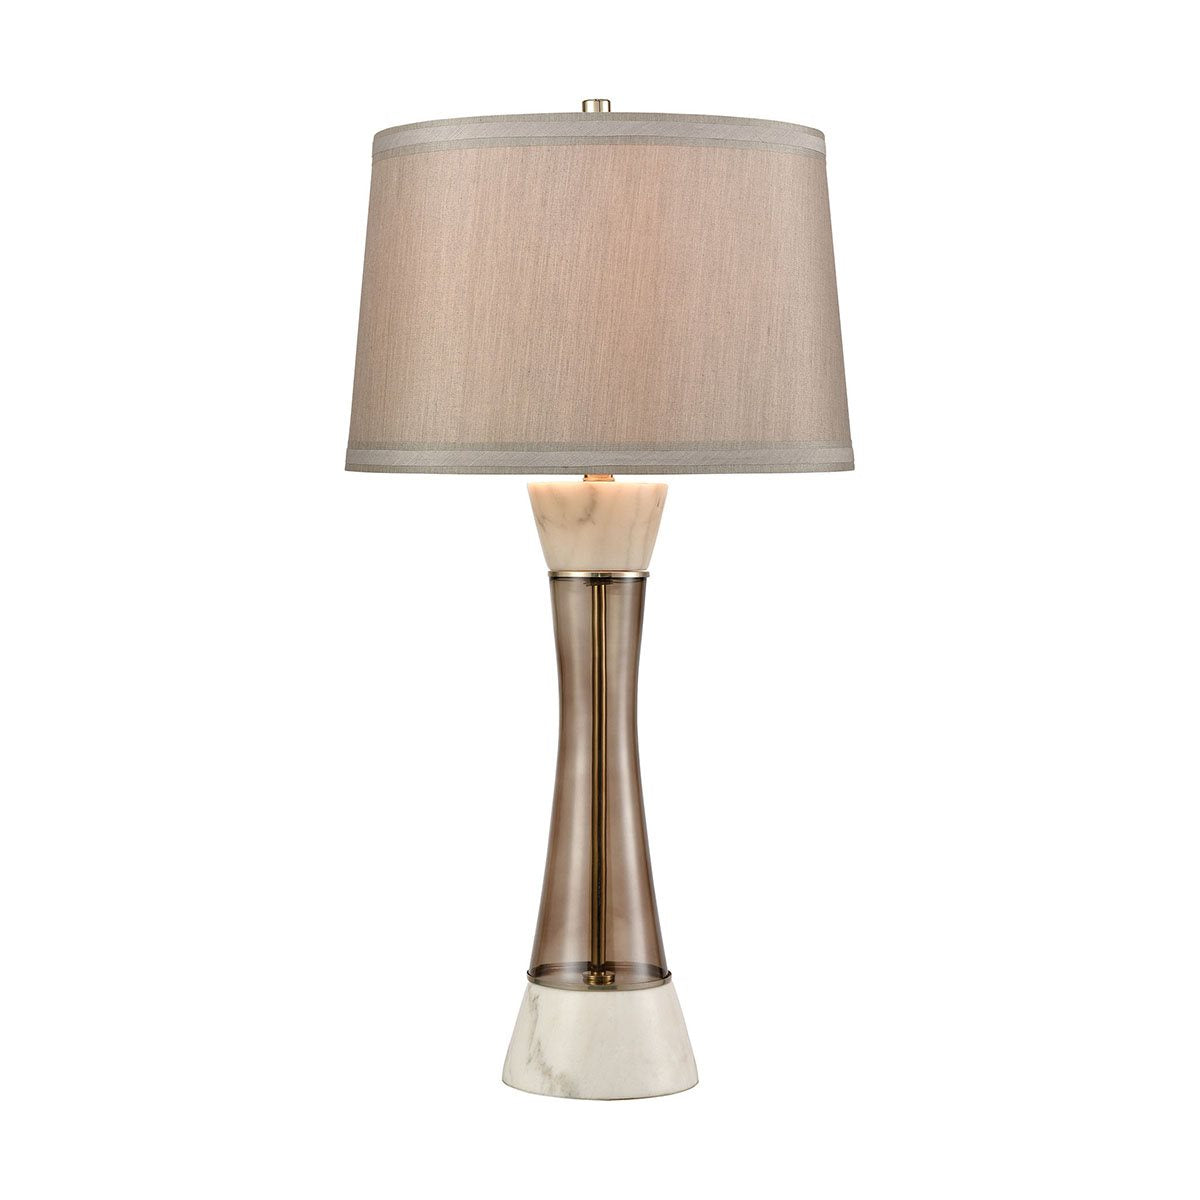 Stein World Somerfield Table Lamp 77121